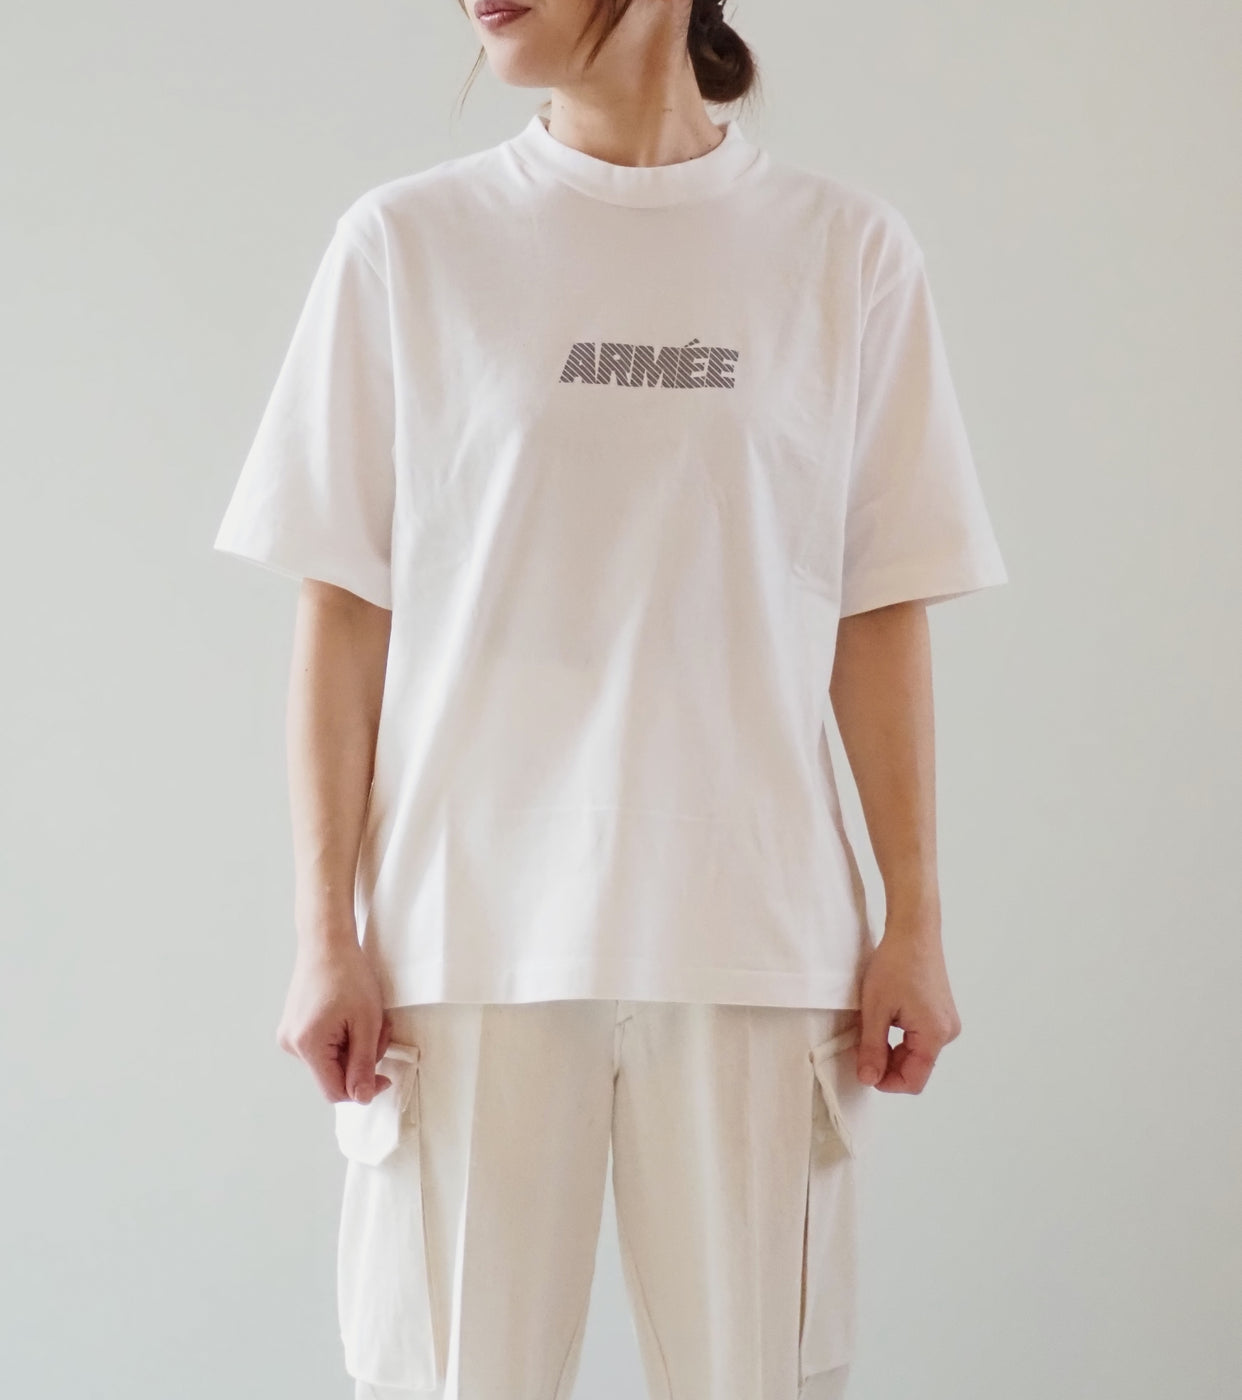 blurhms ROOT STOCK ARMEE Print Tshirt Standard, White